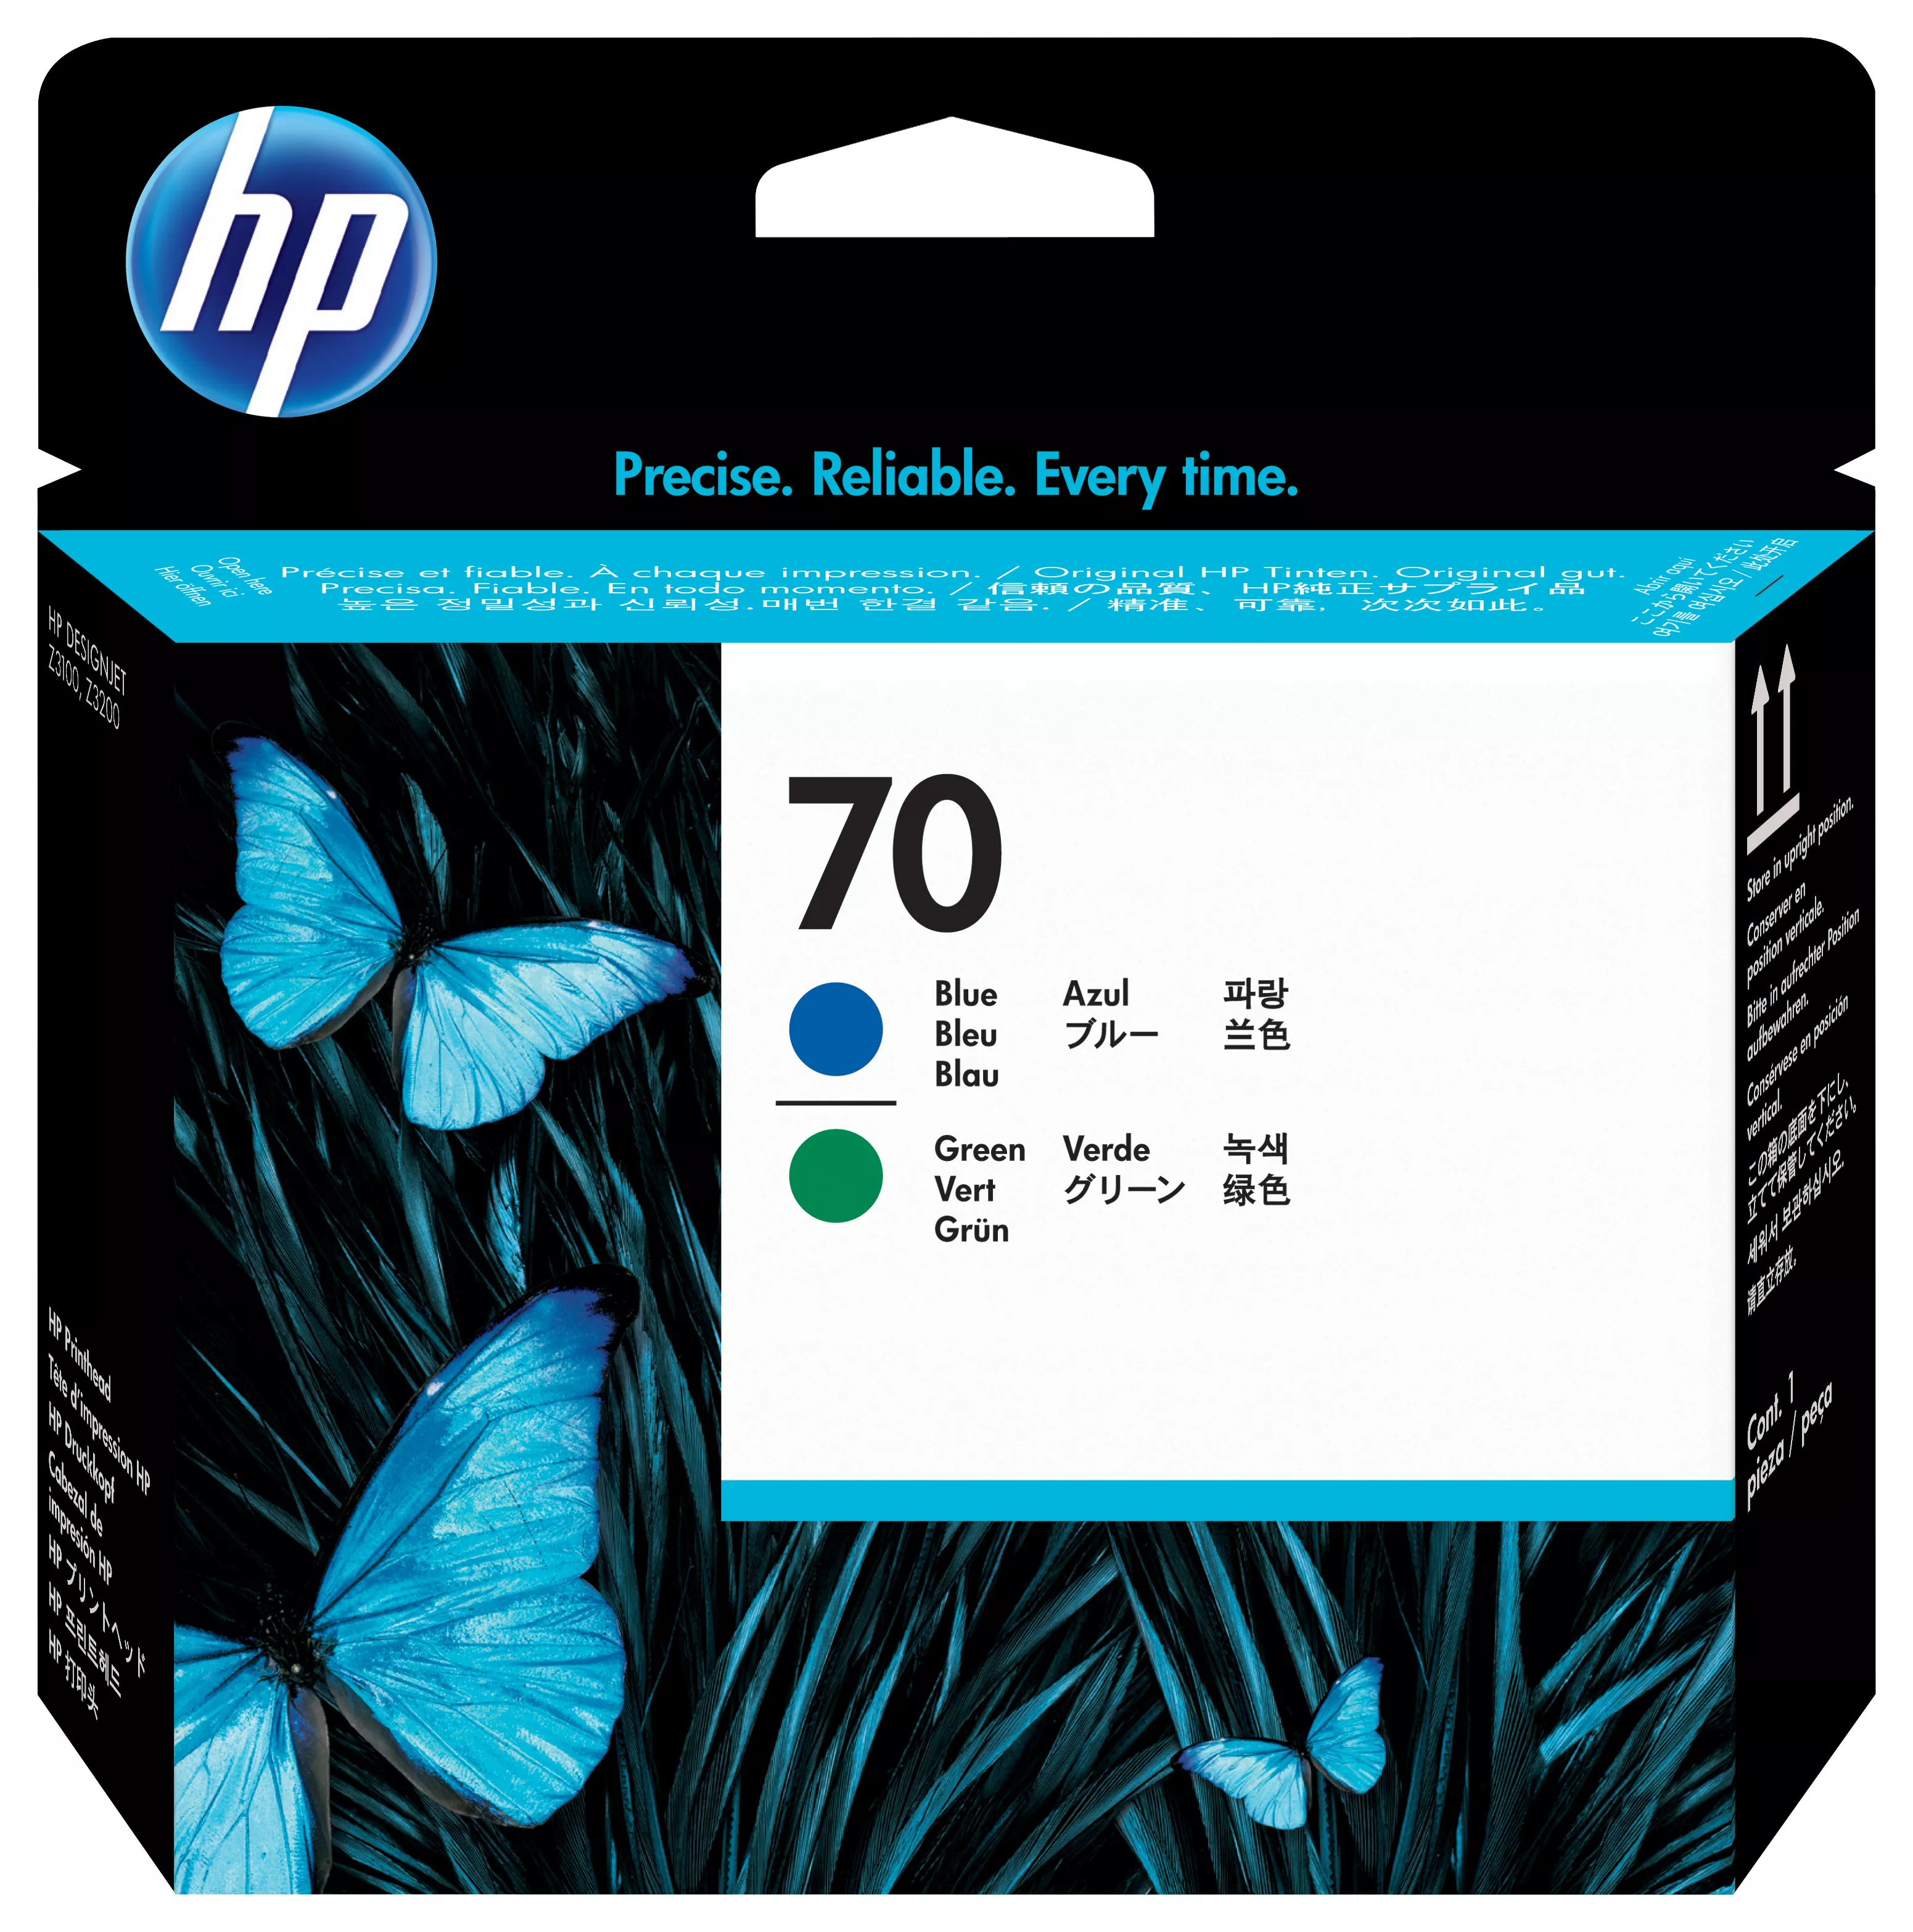 Vente HP 70 original printhead C9408A blue and green HP au meilleur prix - visuel 2